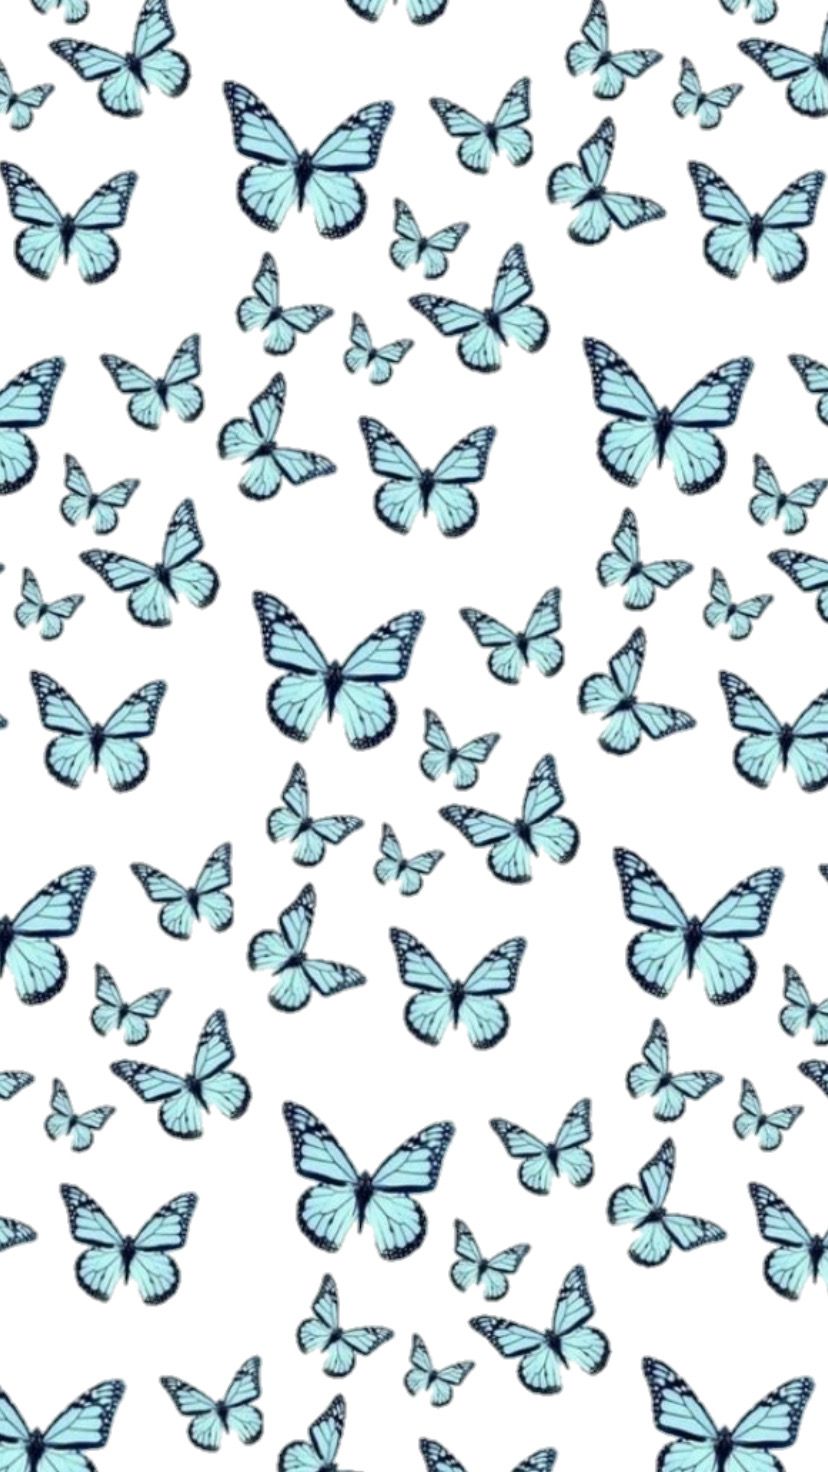 Butterflies wallpaper blue. Butterfly wallpaper, Aesthetic wallpaper, Butterfly print pattern